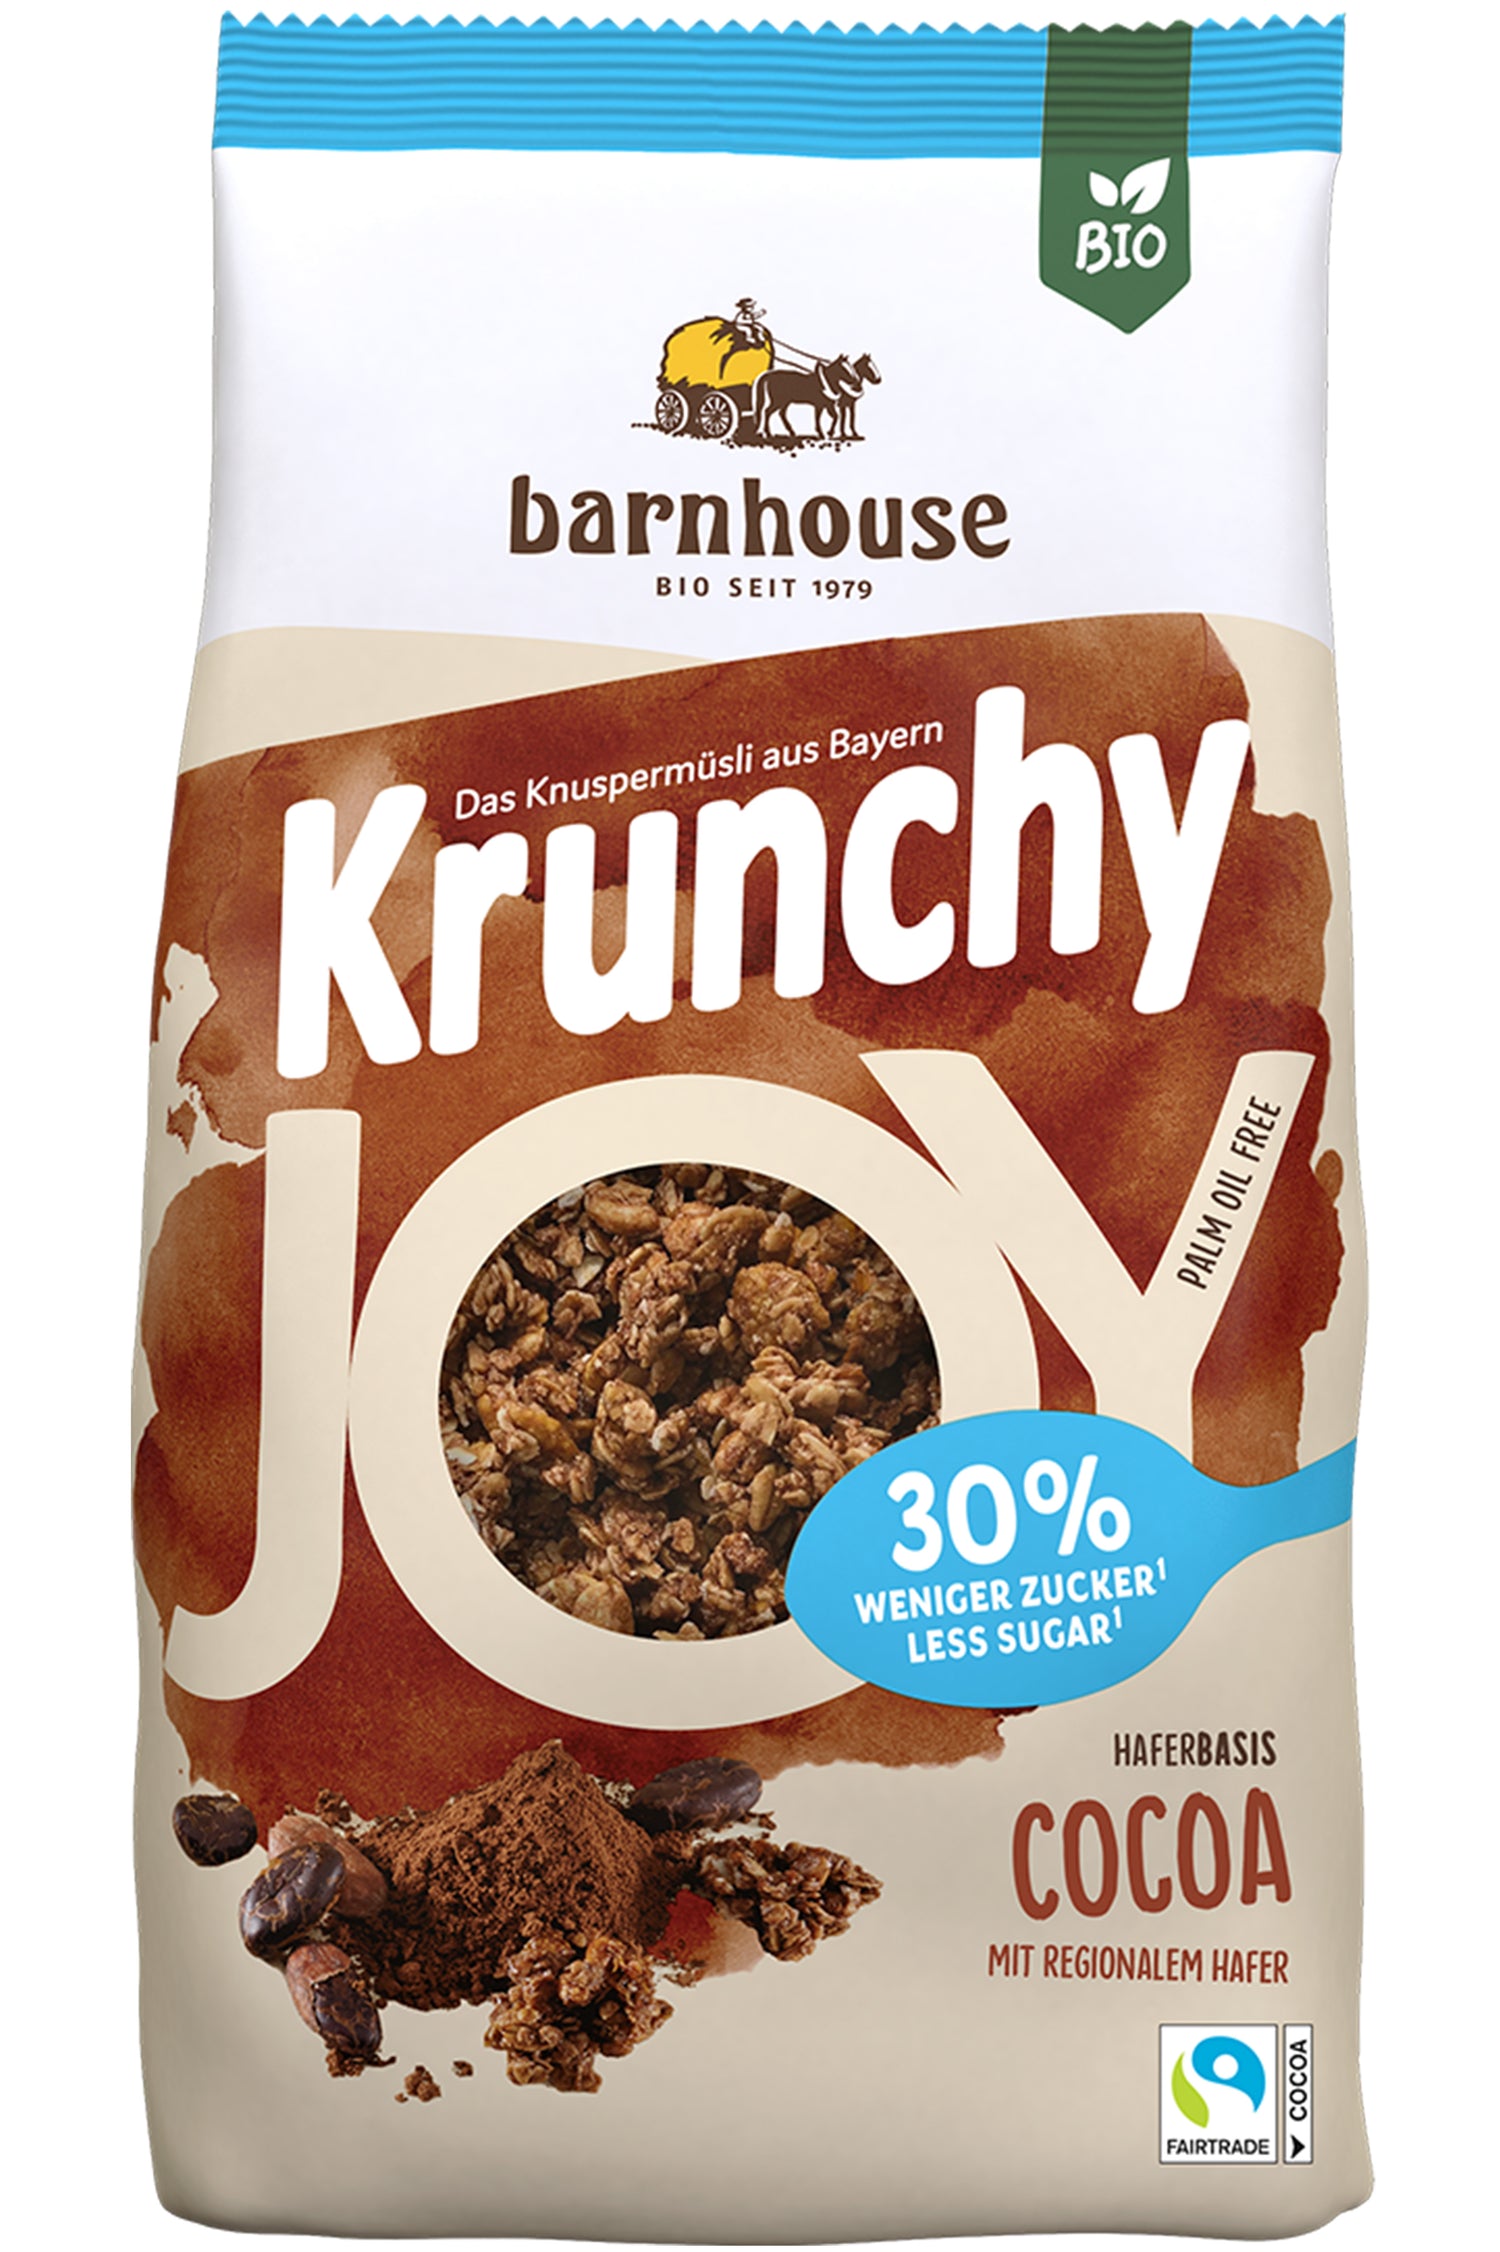 Krunchy Joy Cocoa